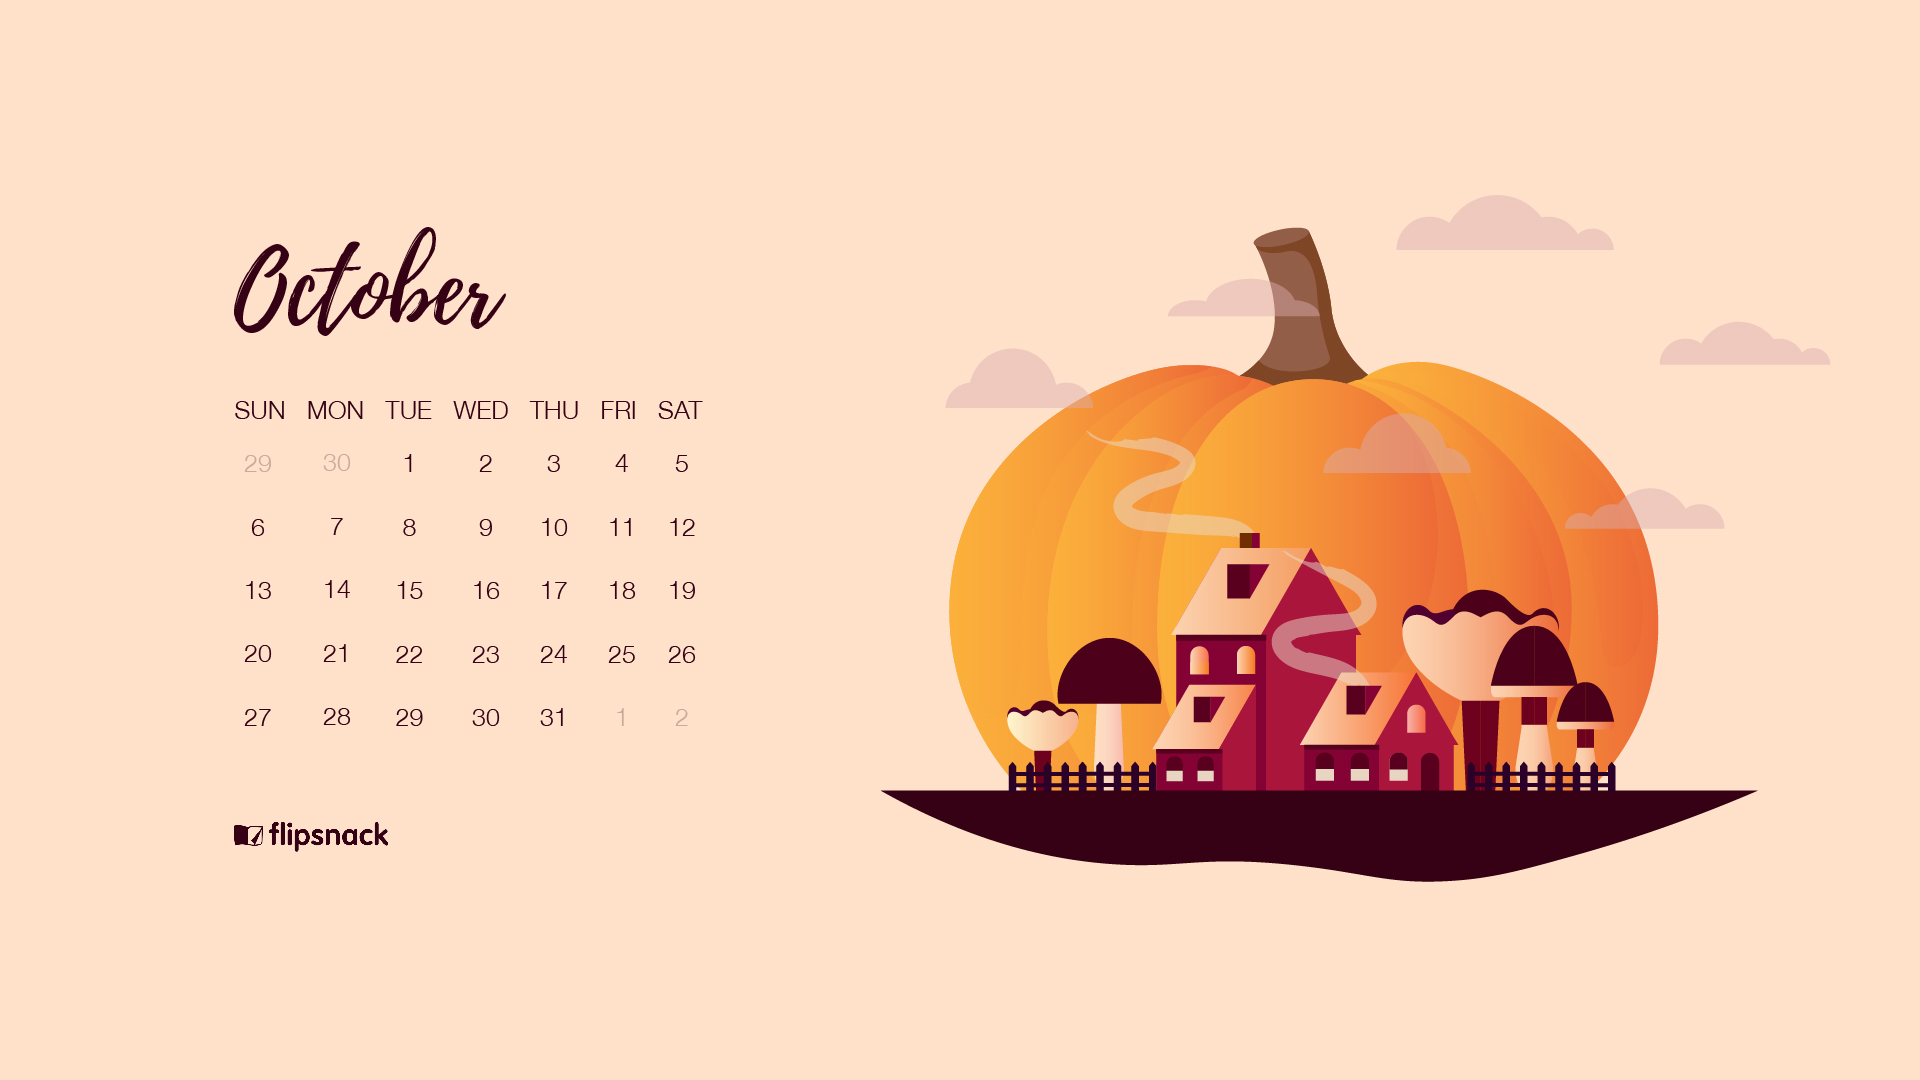 Фон обои октябрь с календарем